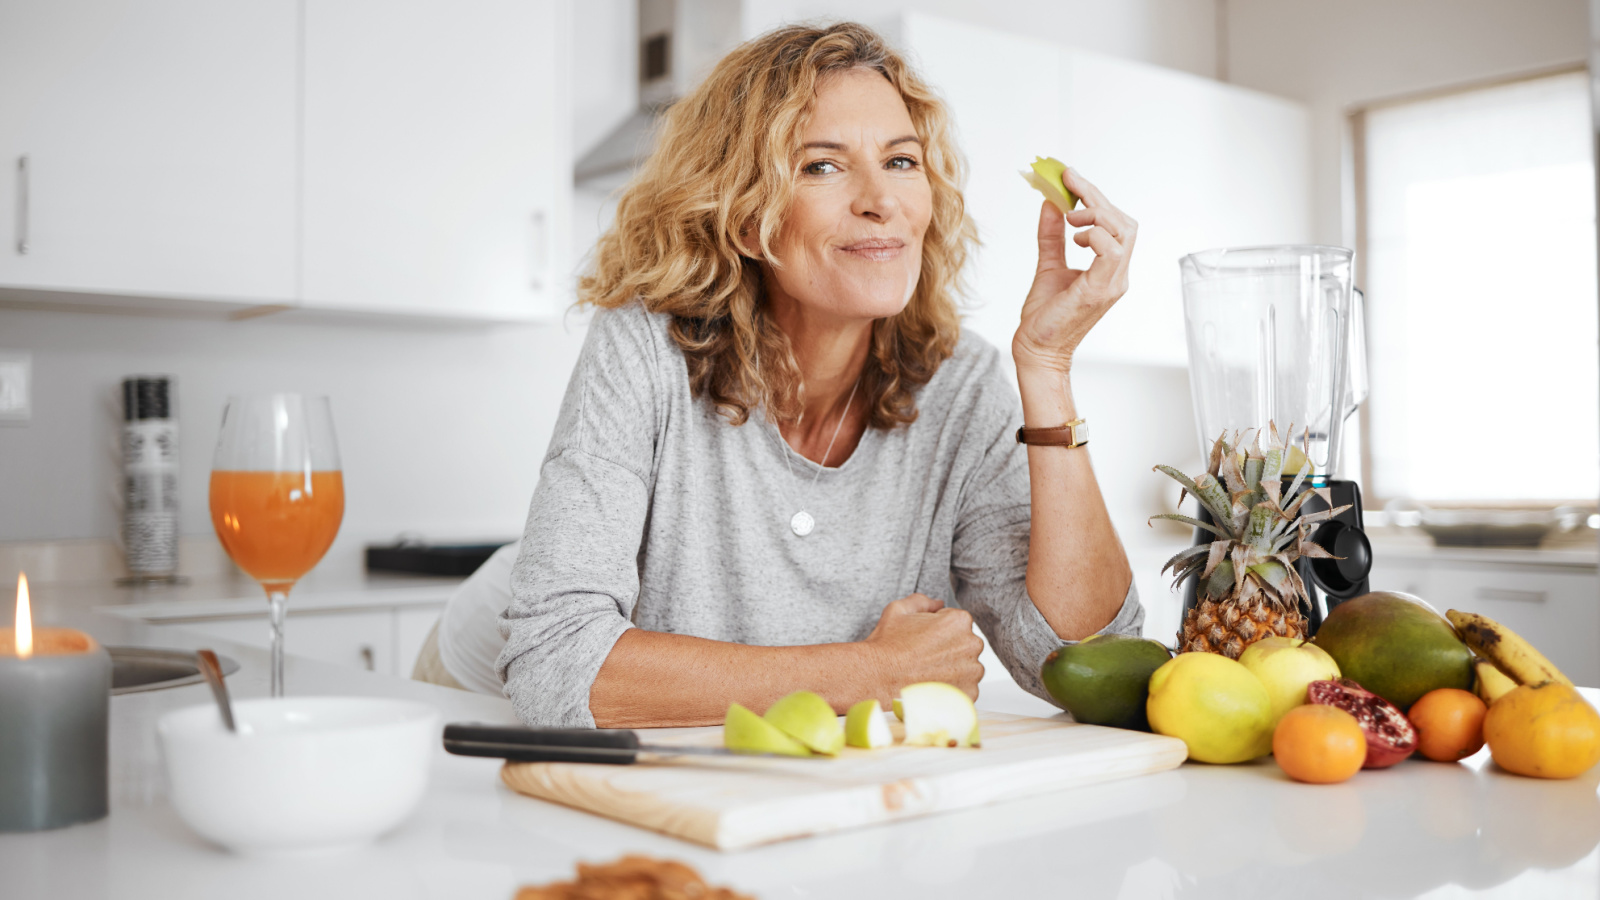 Woman Mature Food Eating Fruit Health PeopleImages.com Yuri A Shutterstock